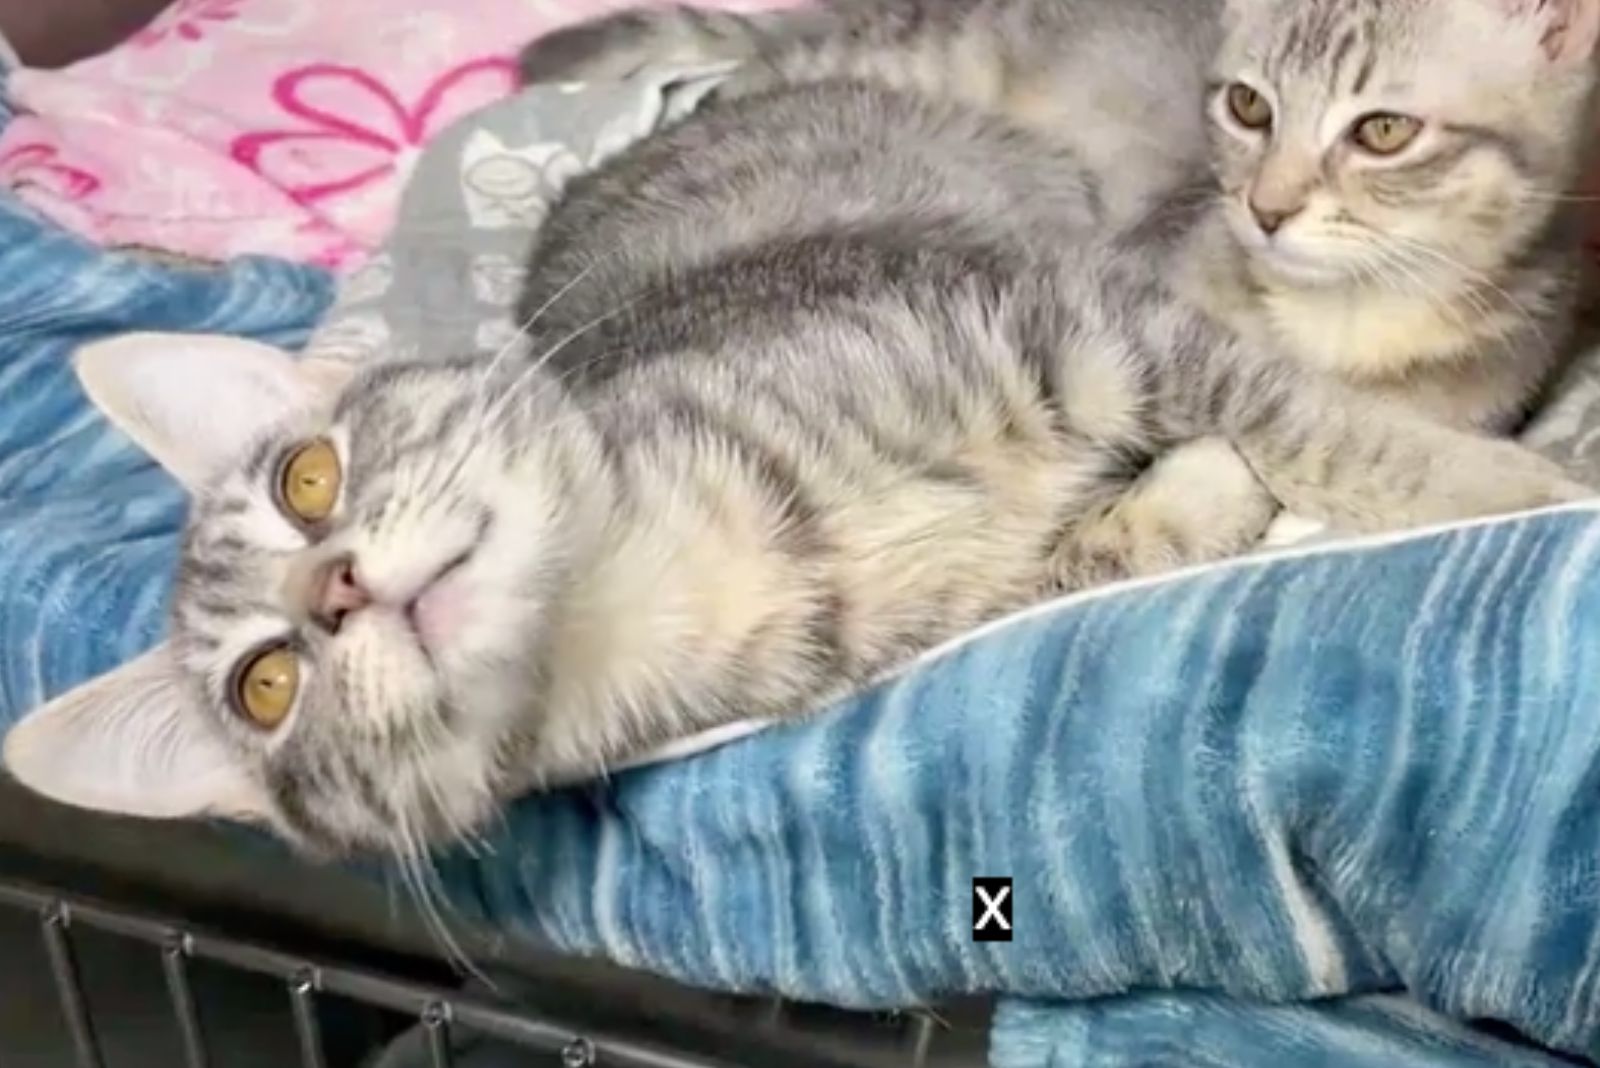 rescued kittens lying